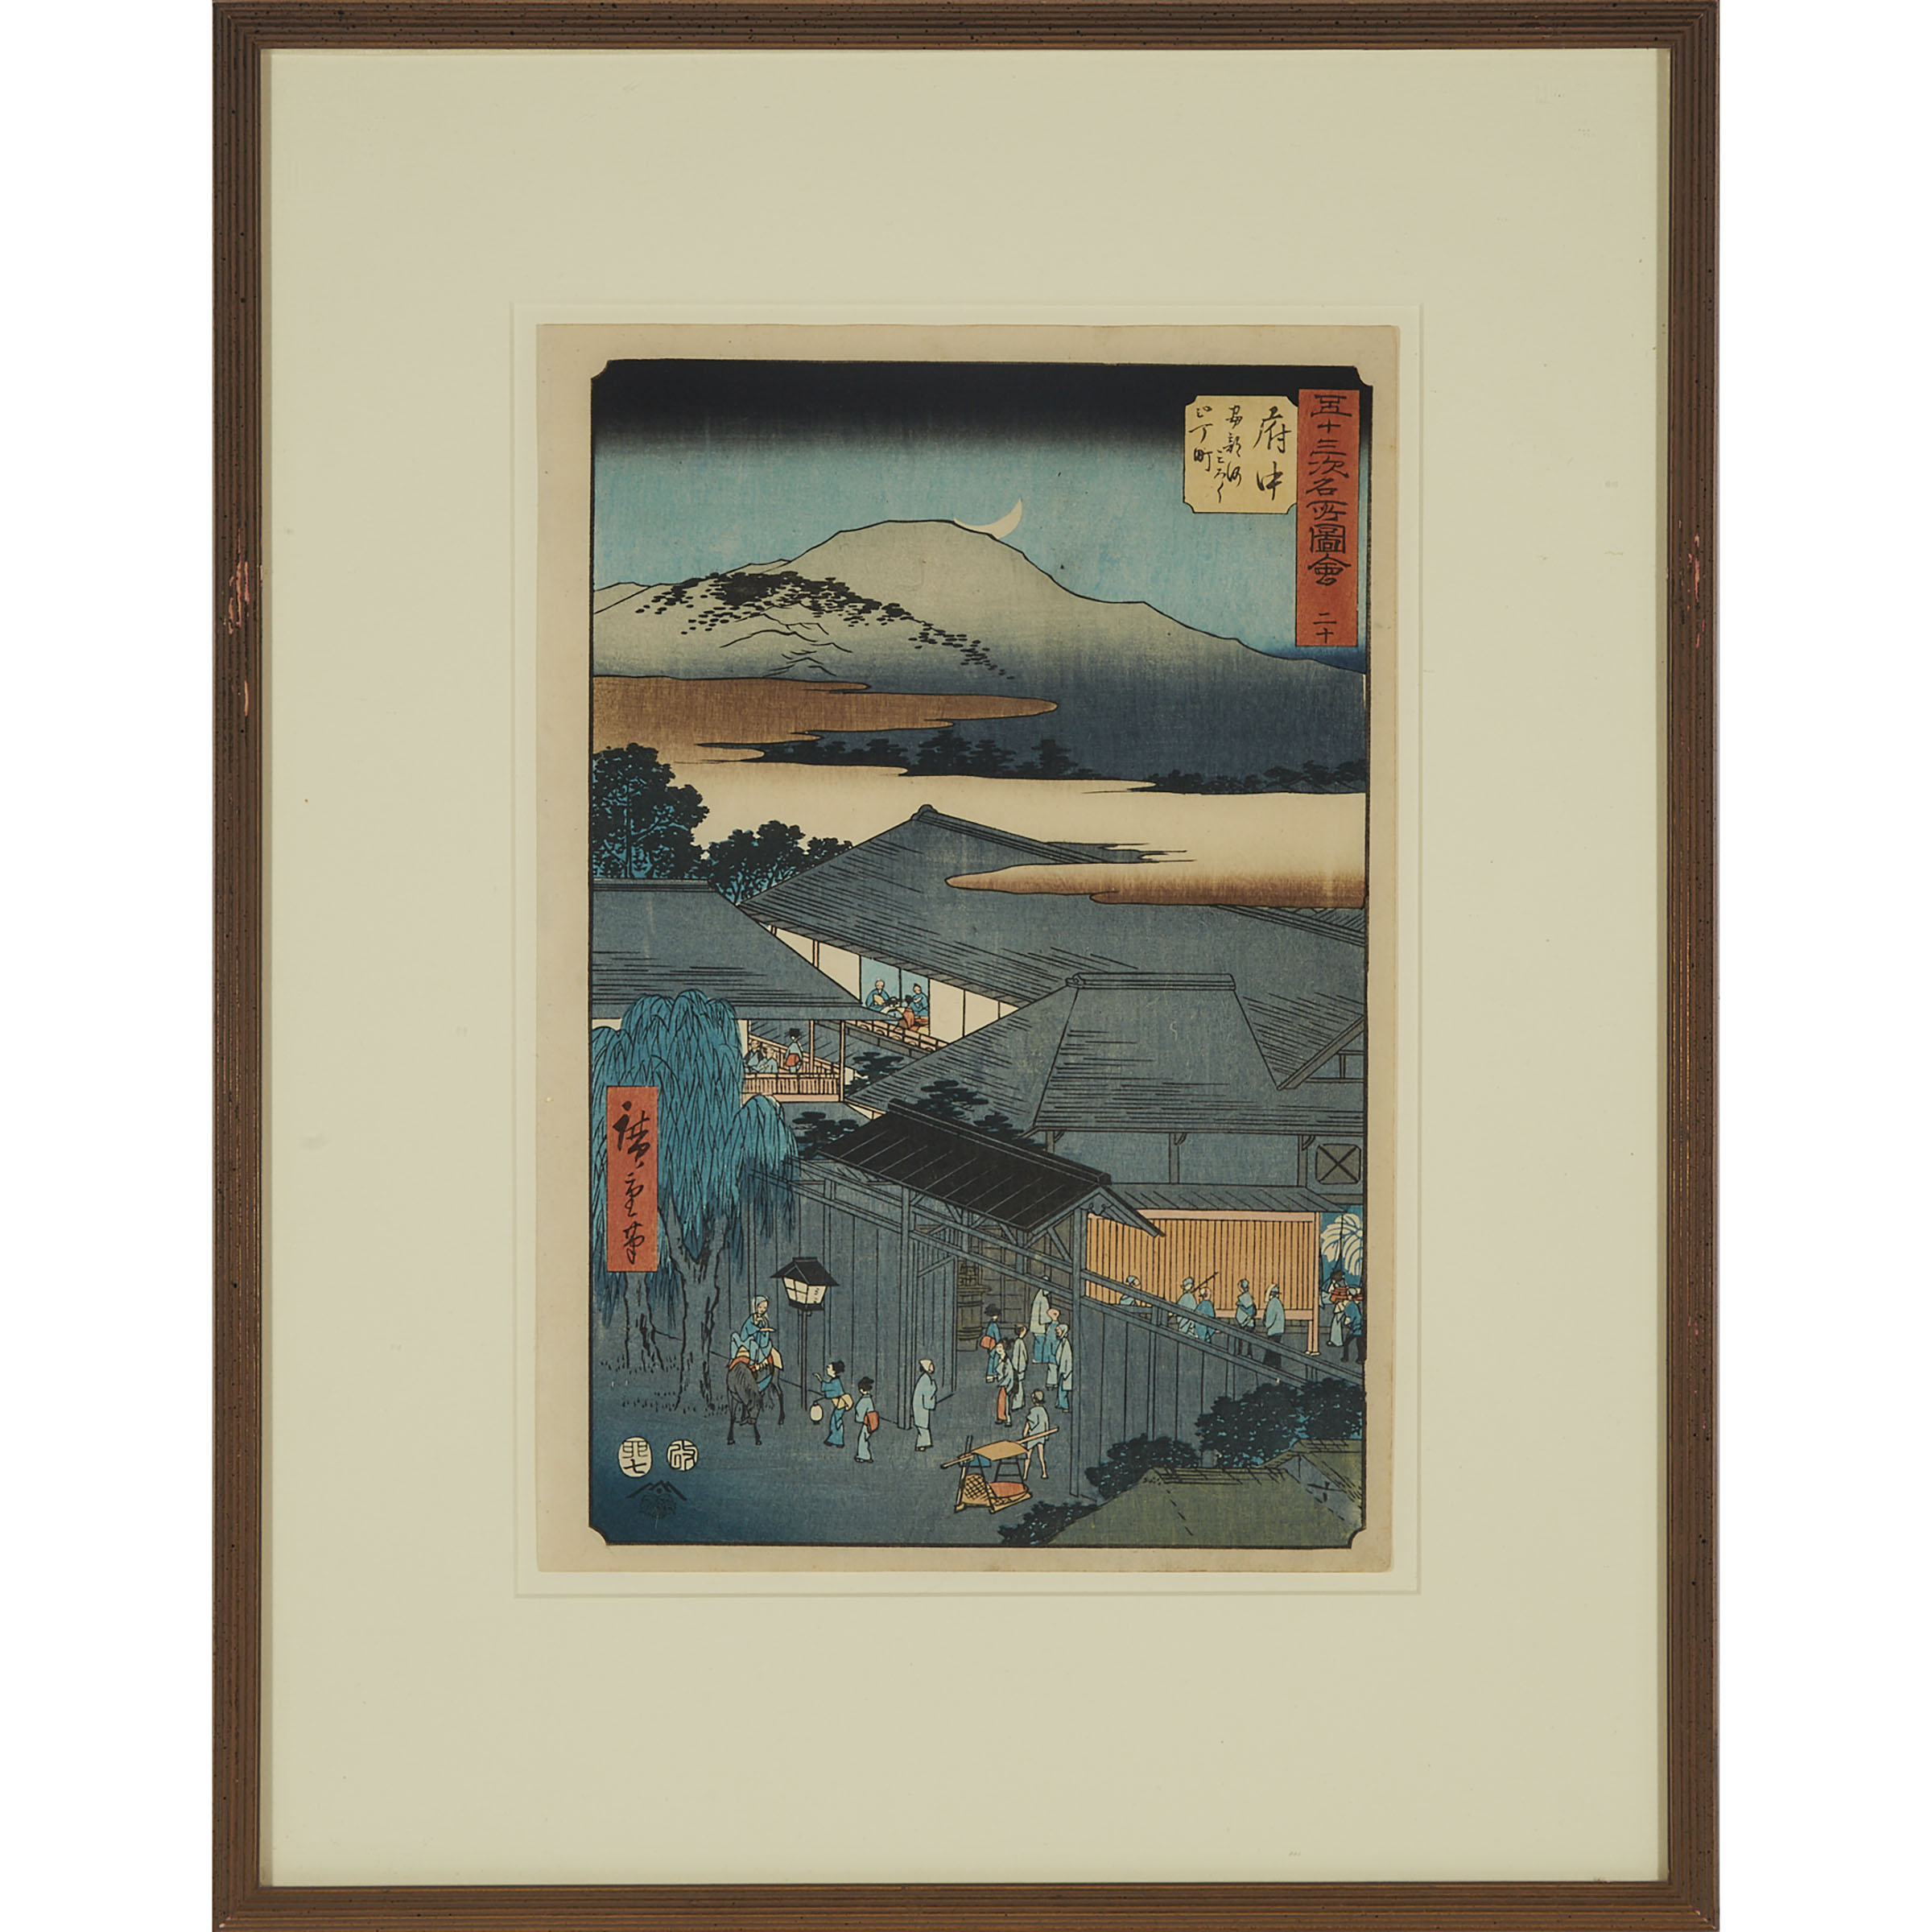 Utagawa Hiroshige (1797-1858), Fuchu, Edo Period (1615-1868), 1855